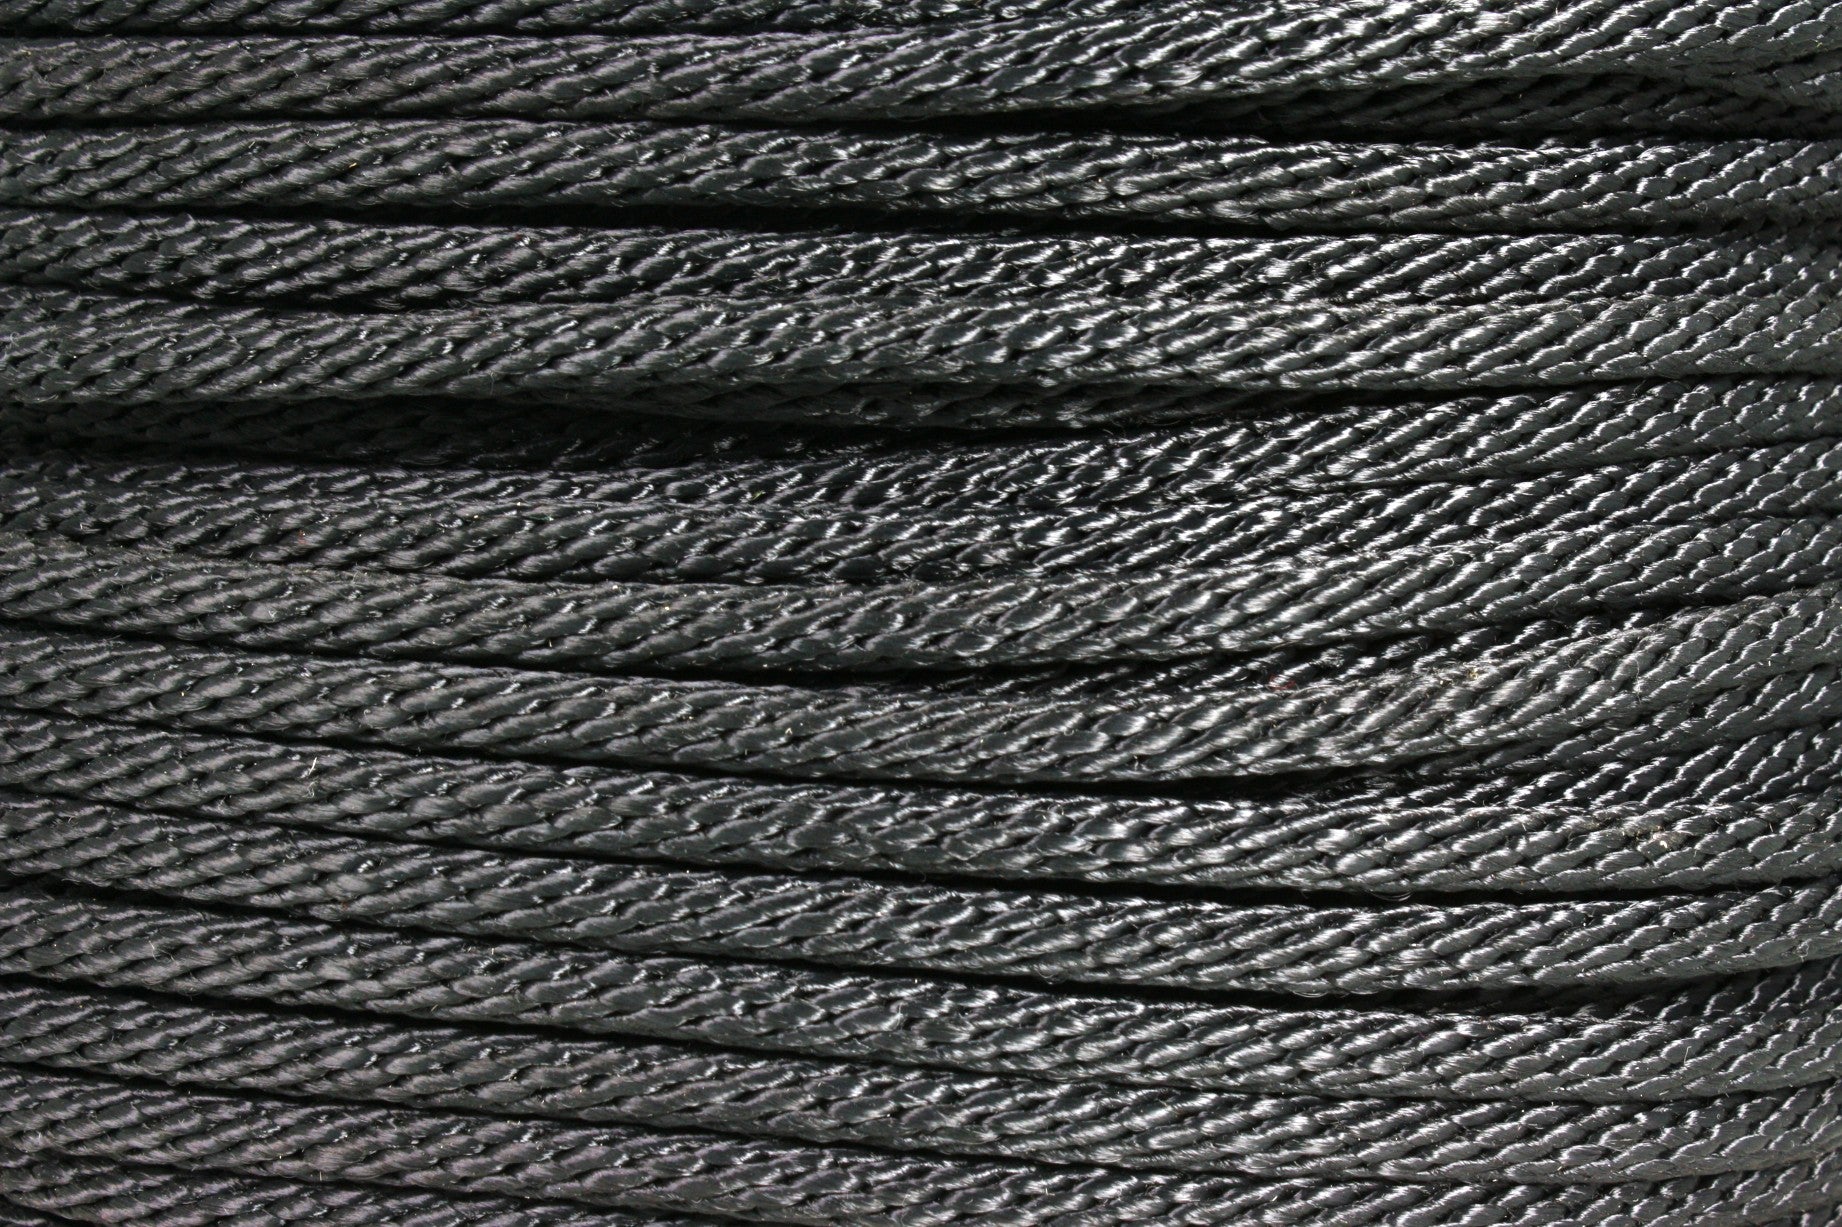 Close up of black sash cord